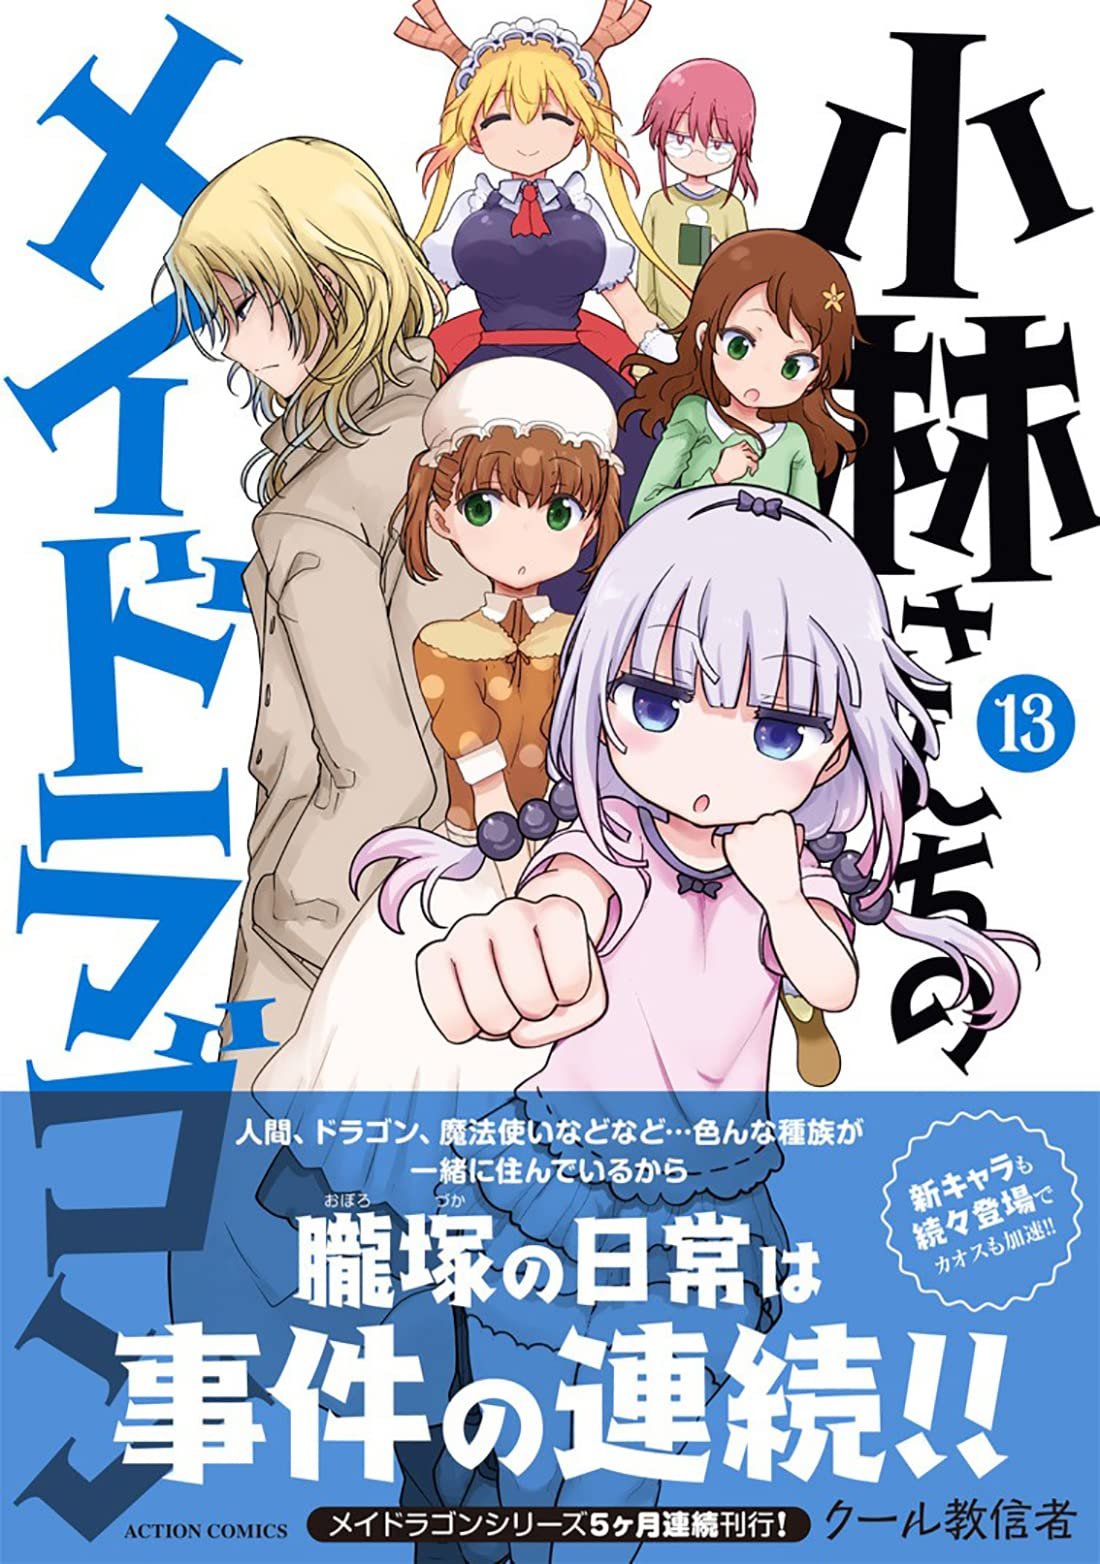 miss kobayashi manga volume 13